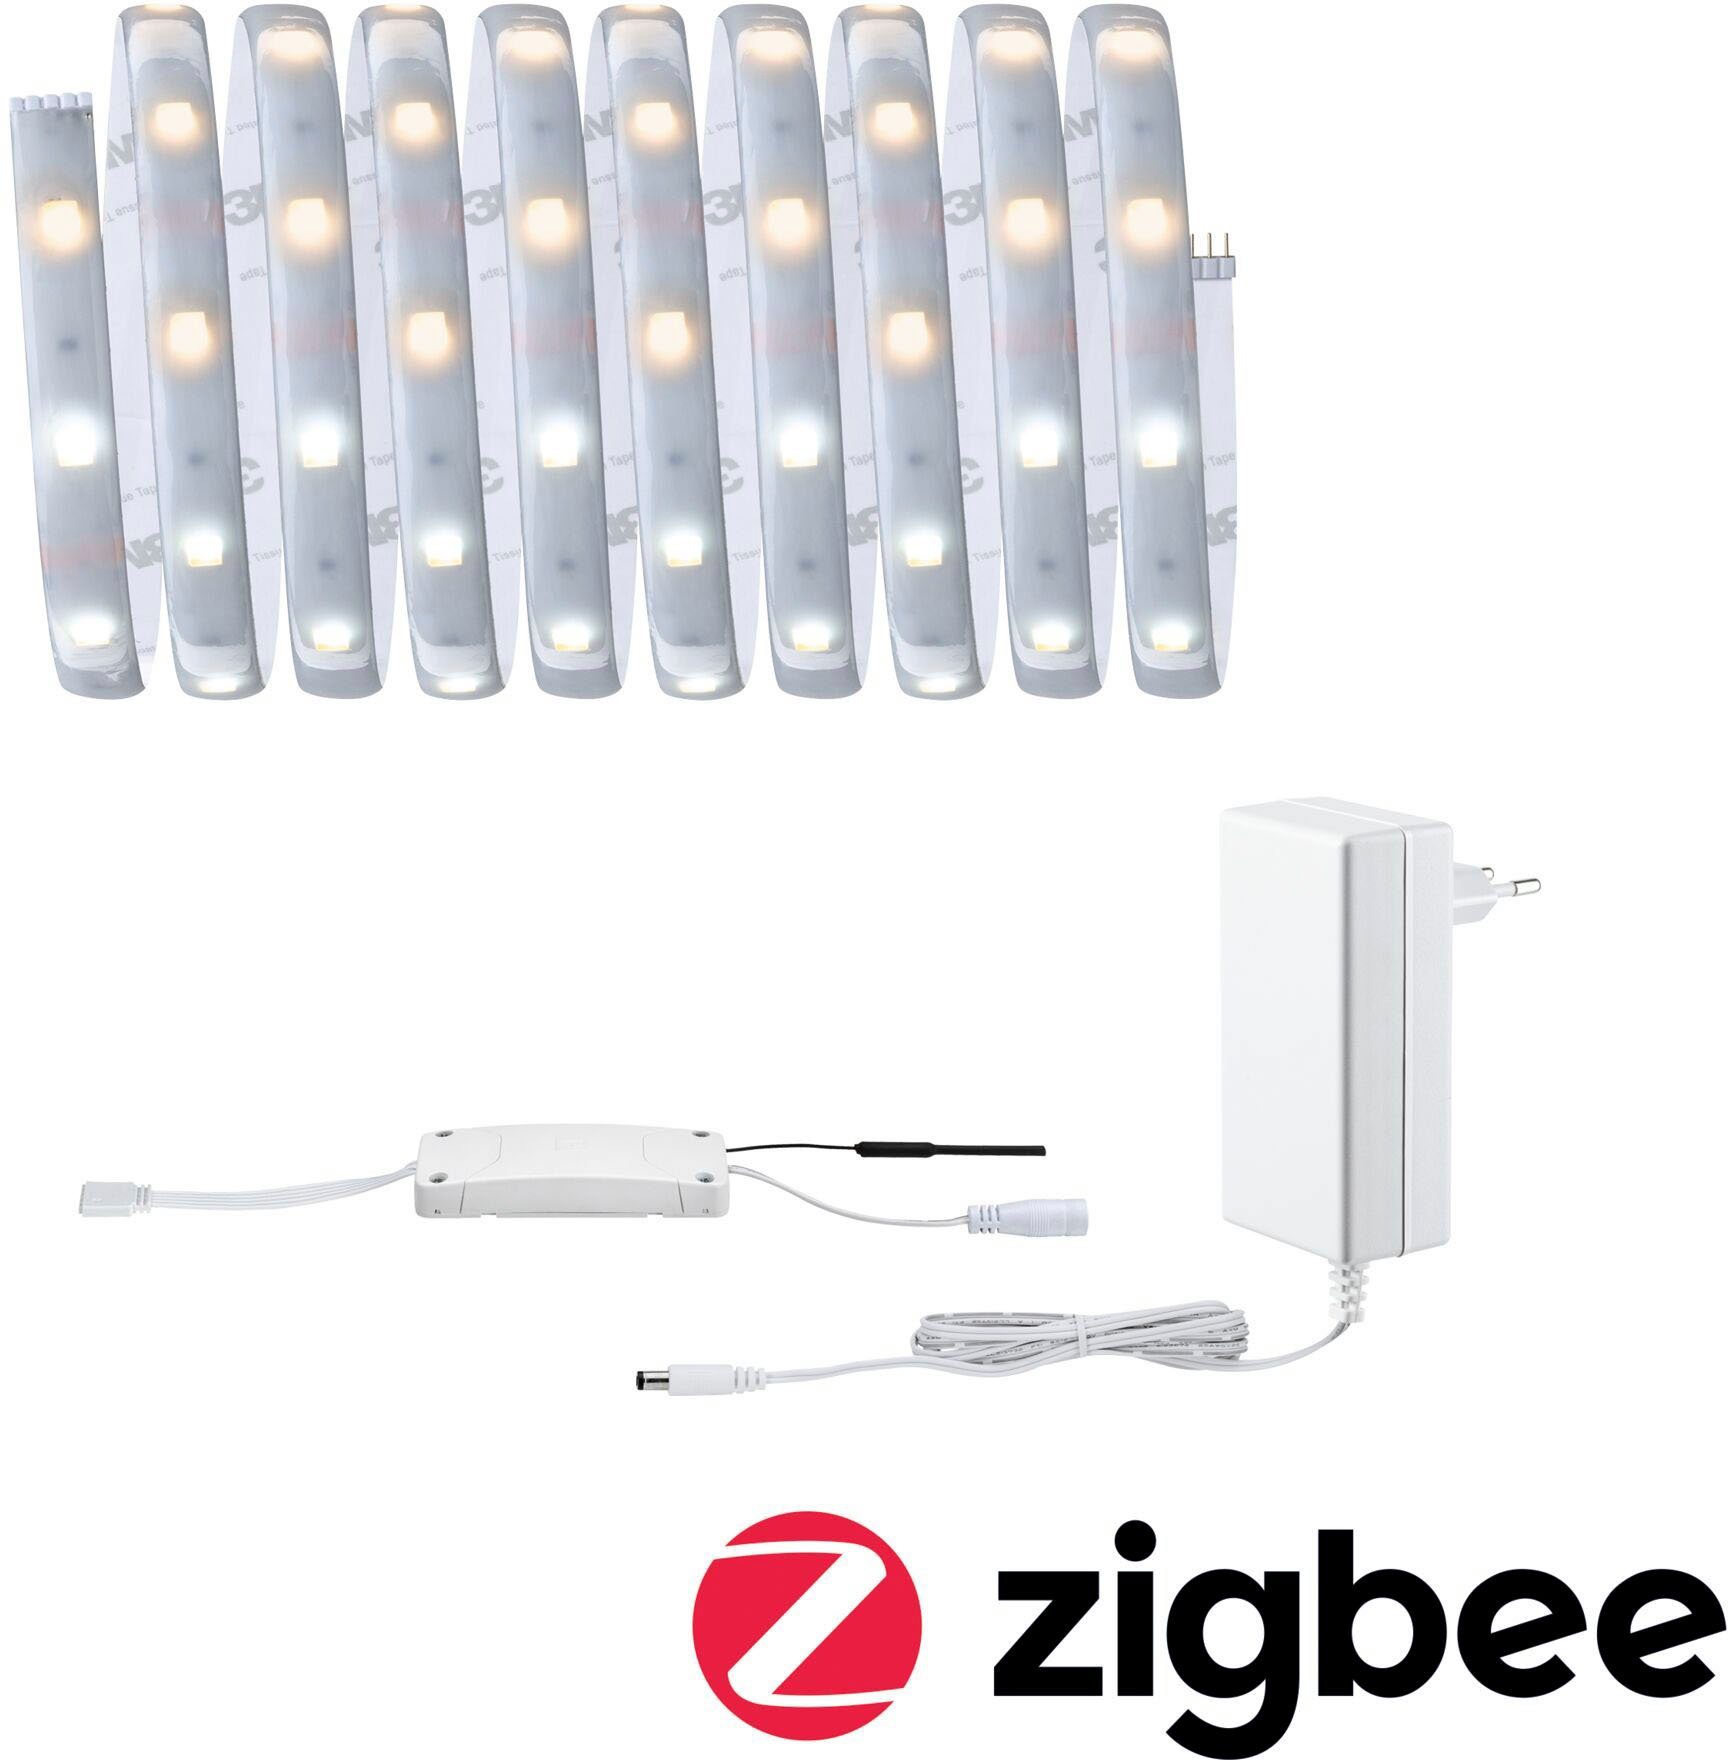 Paulmann LED-Streifen MaxLED 250 Basisset 1-flammig, 810lm, Zigbee Home Smart 3m, 810 beschichtet IP44 12W White, Tunable